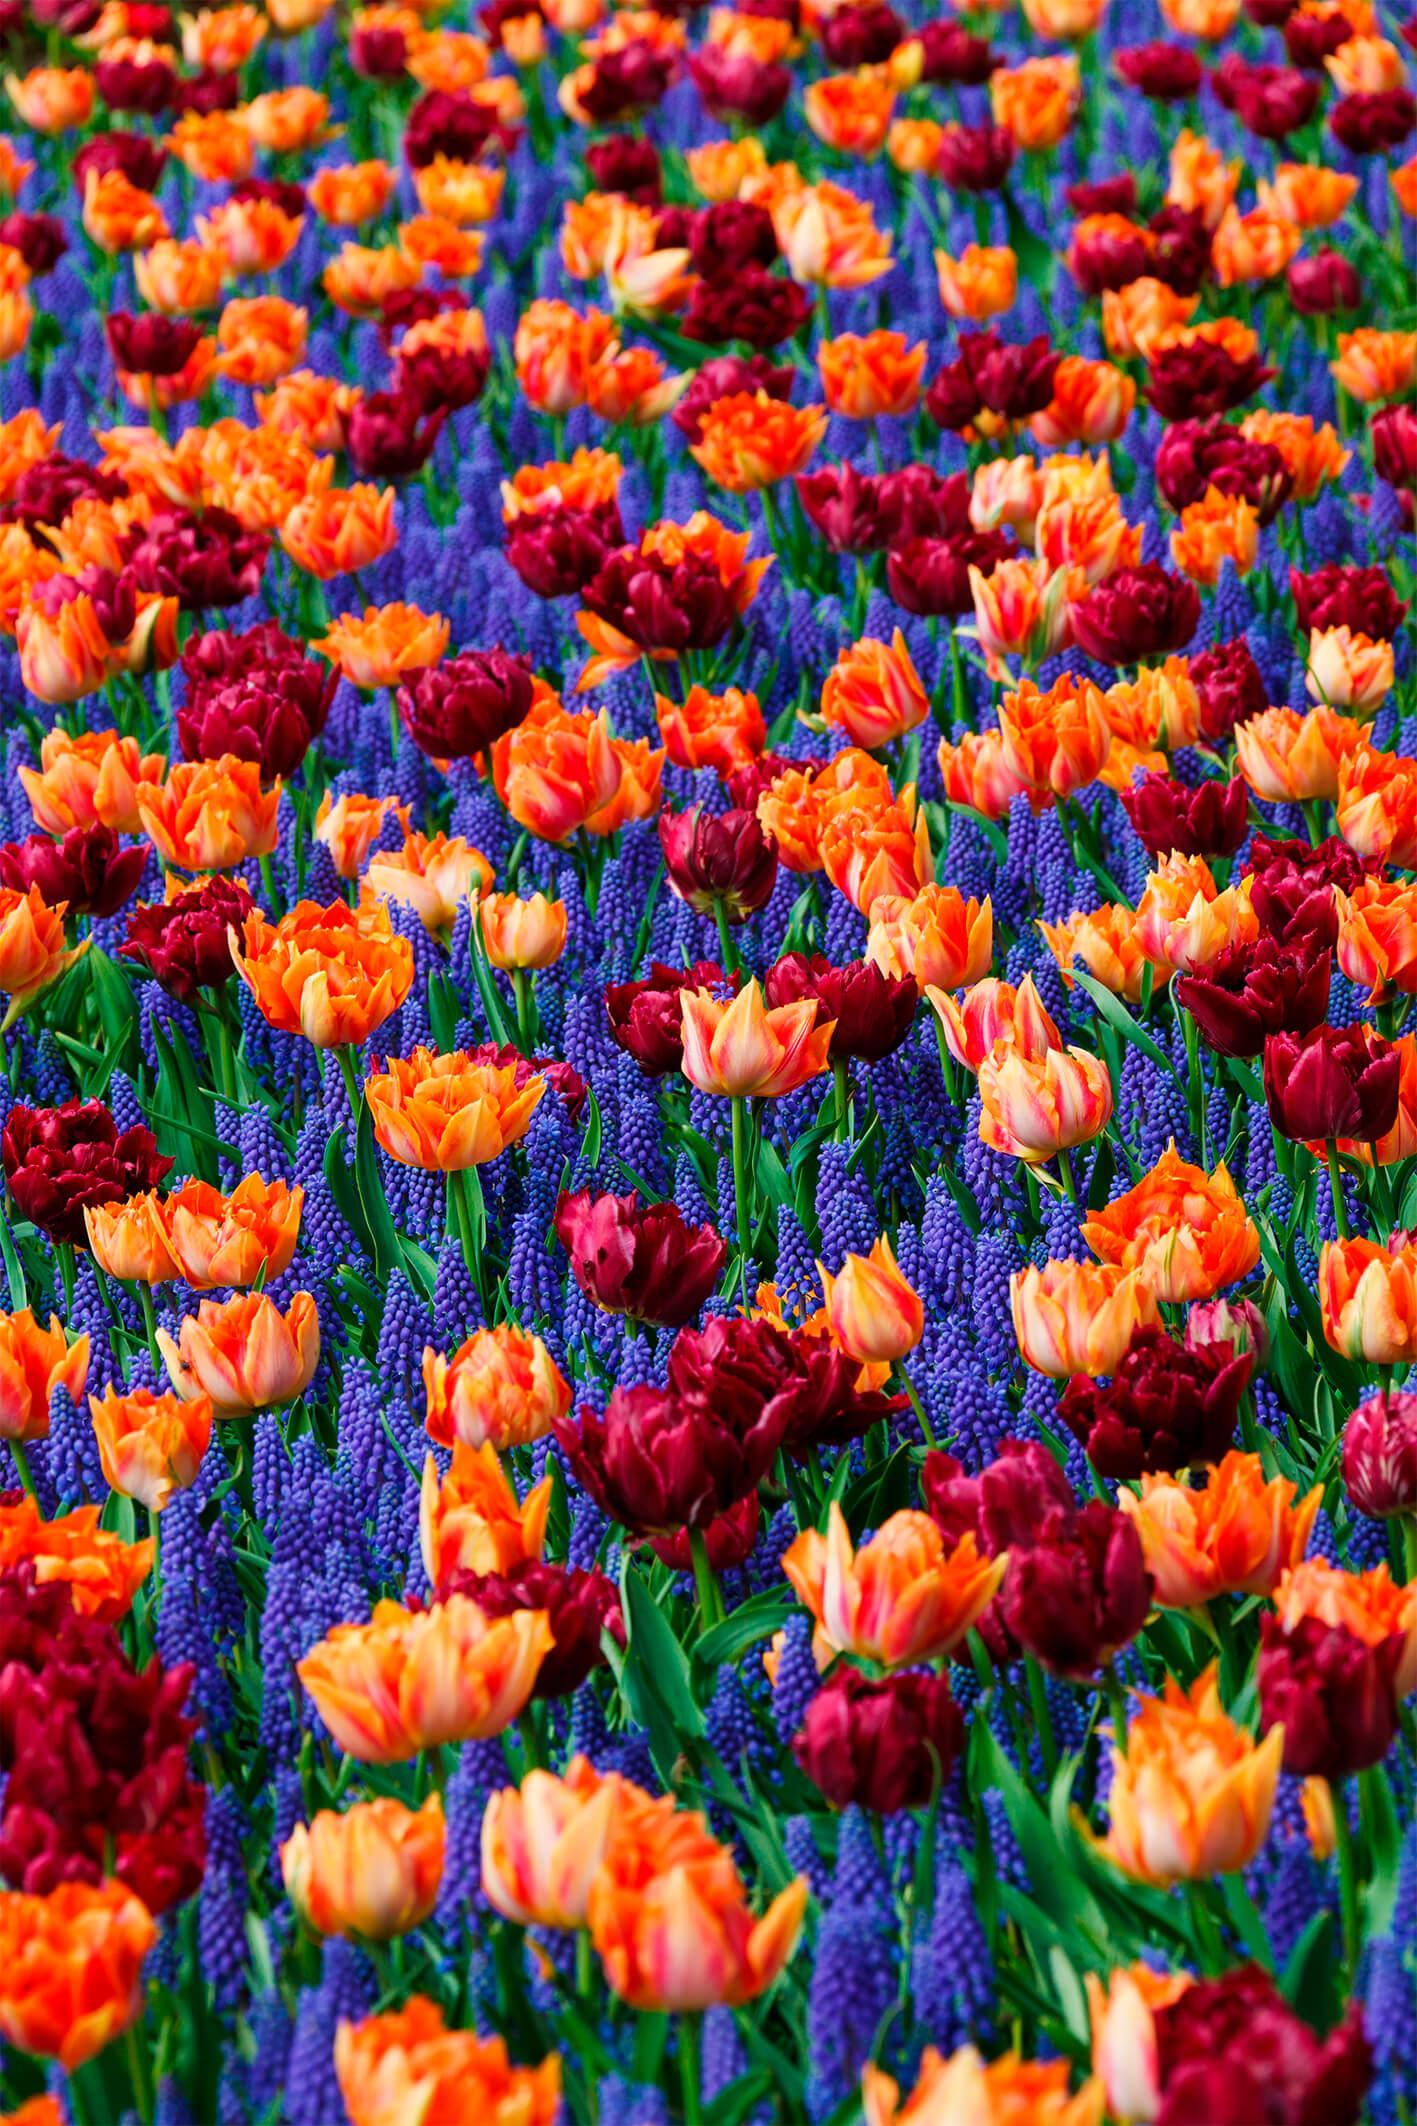 Muscari i tulipany